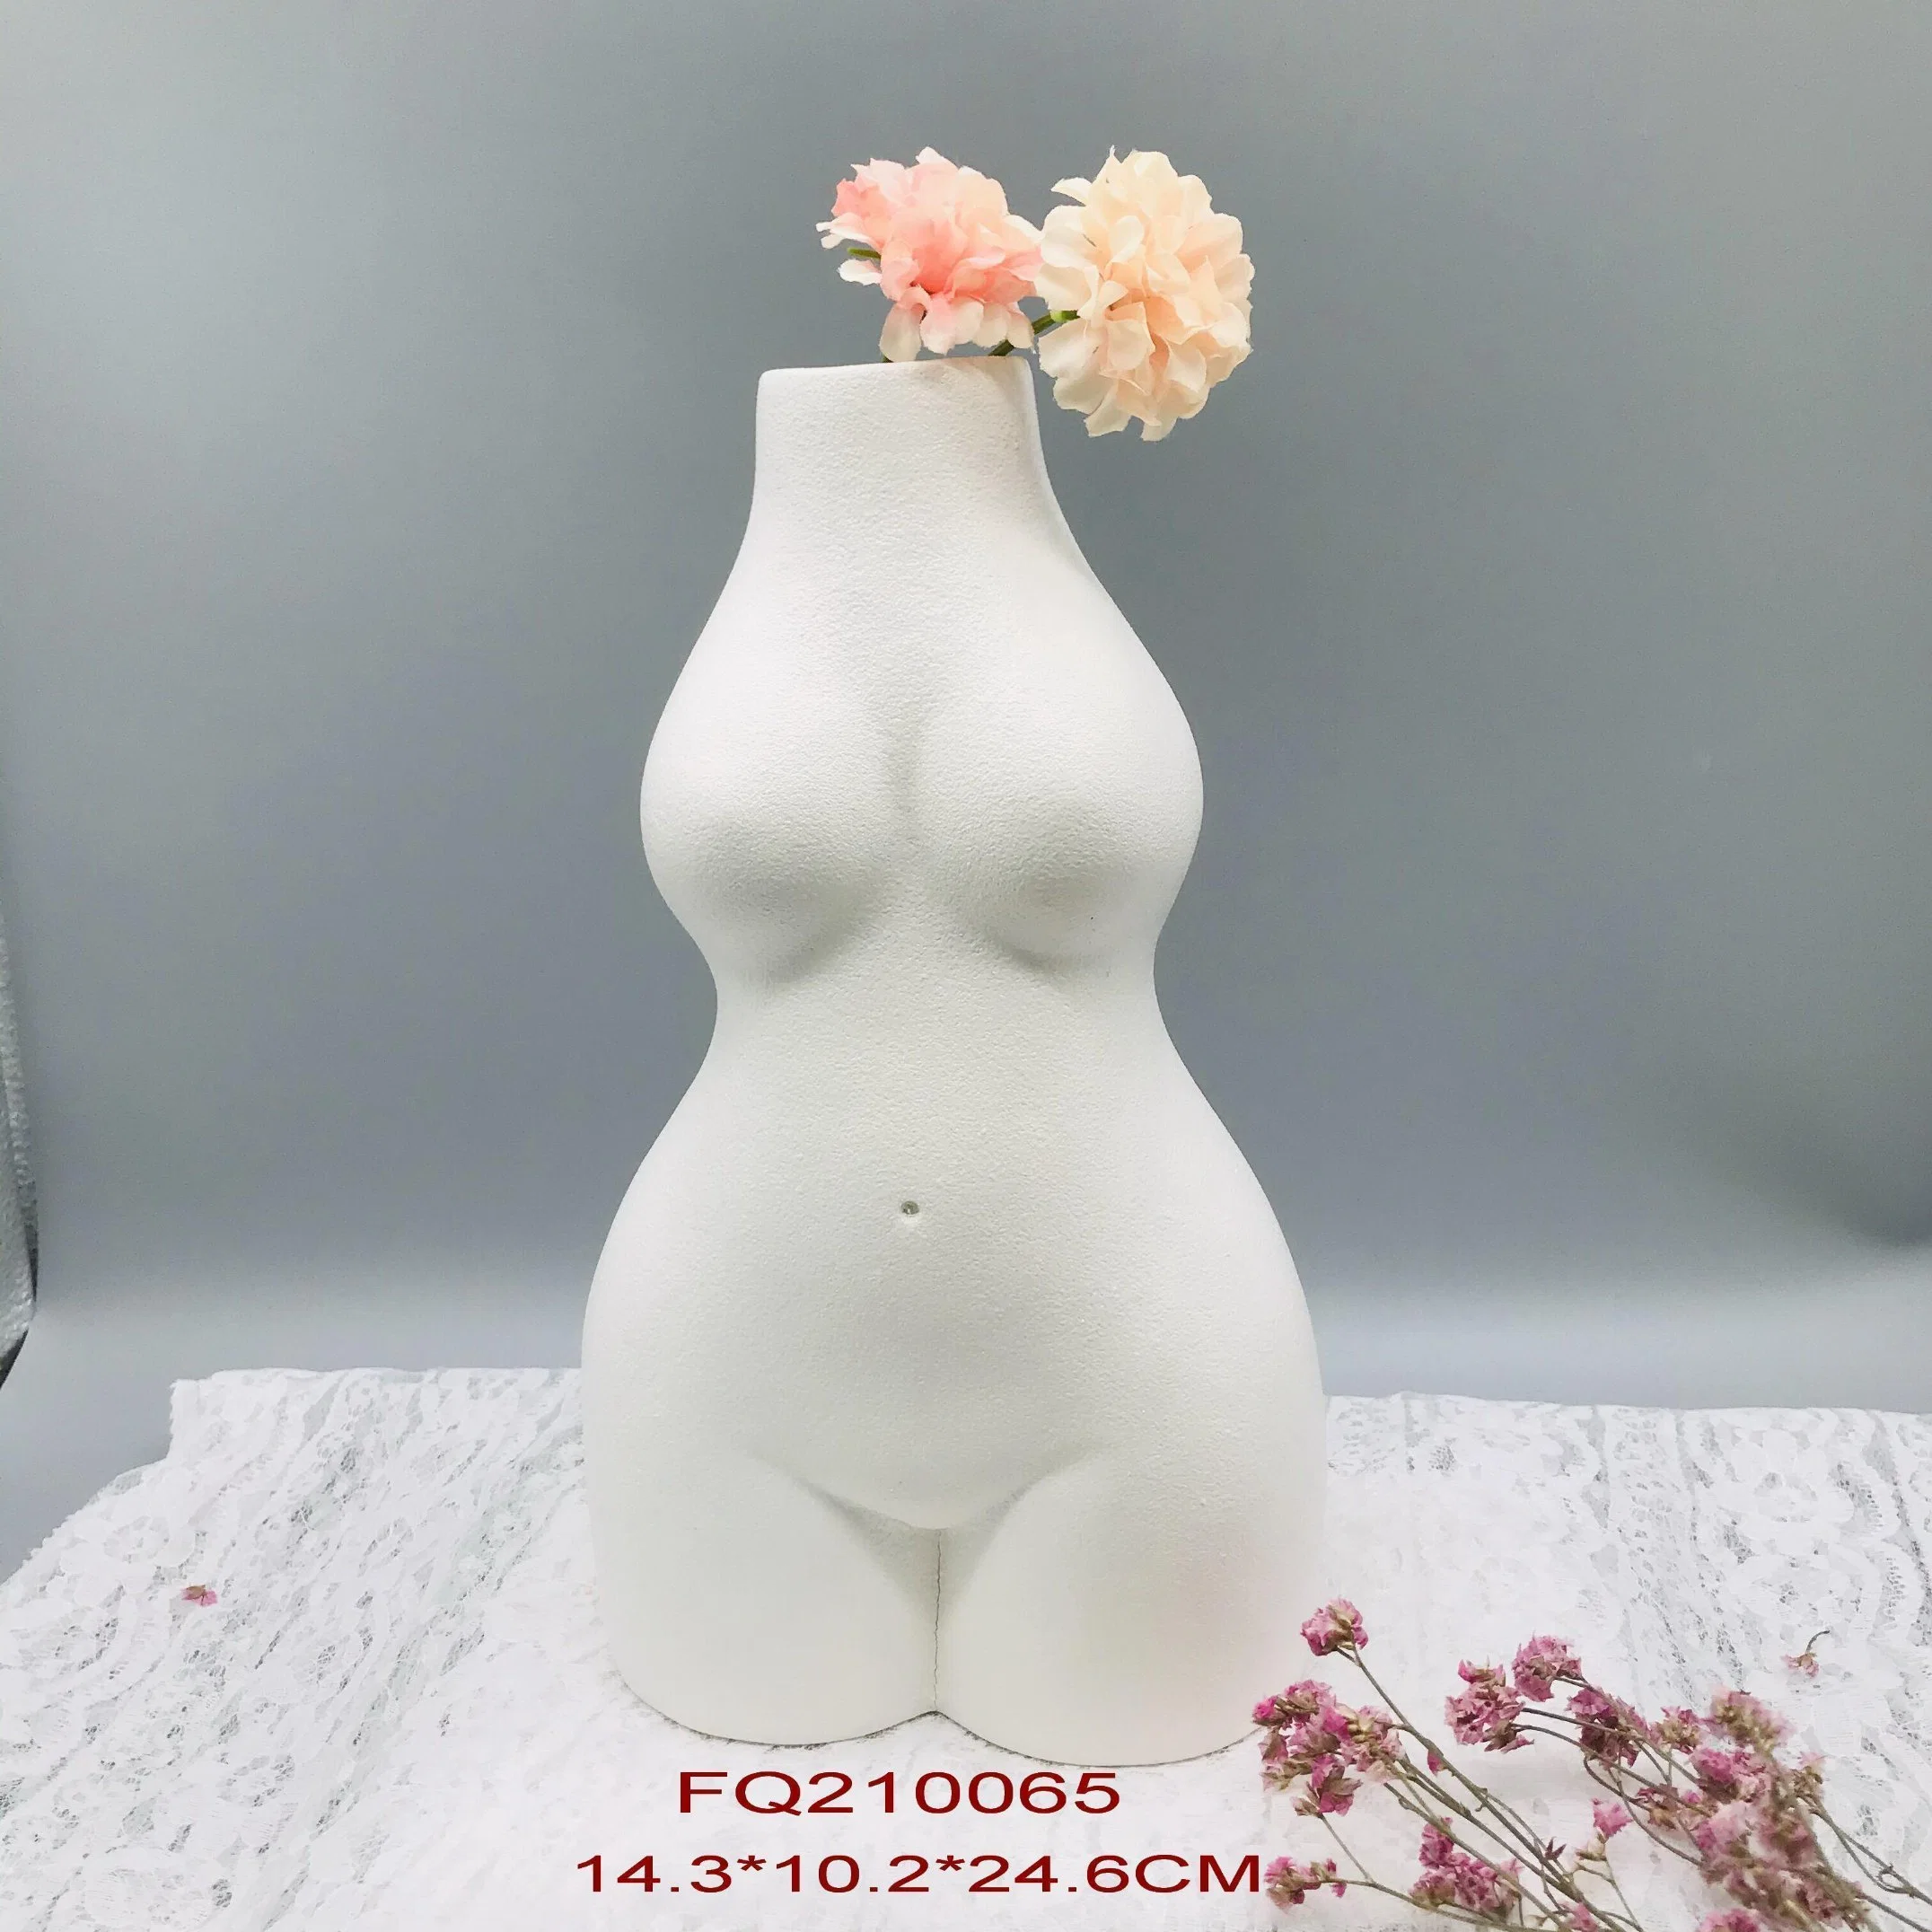 Flower Vase Ceramics Sexy Lady Body Vase Flower Pots Desktop Decorations for Wedding Party Home Office